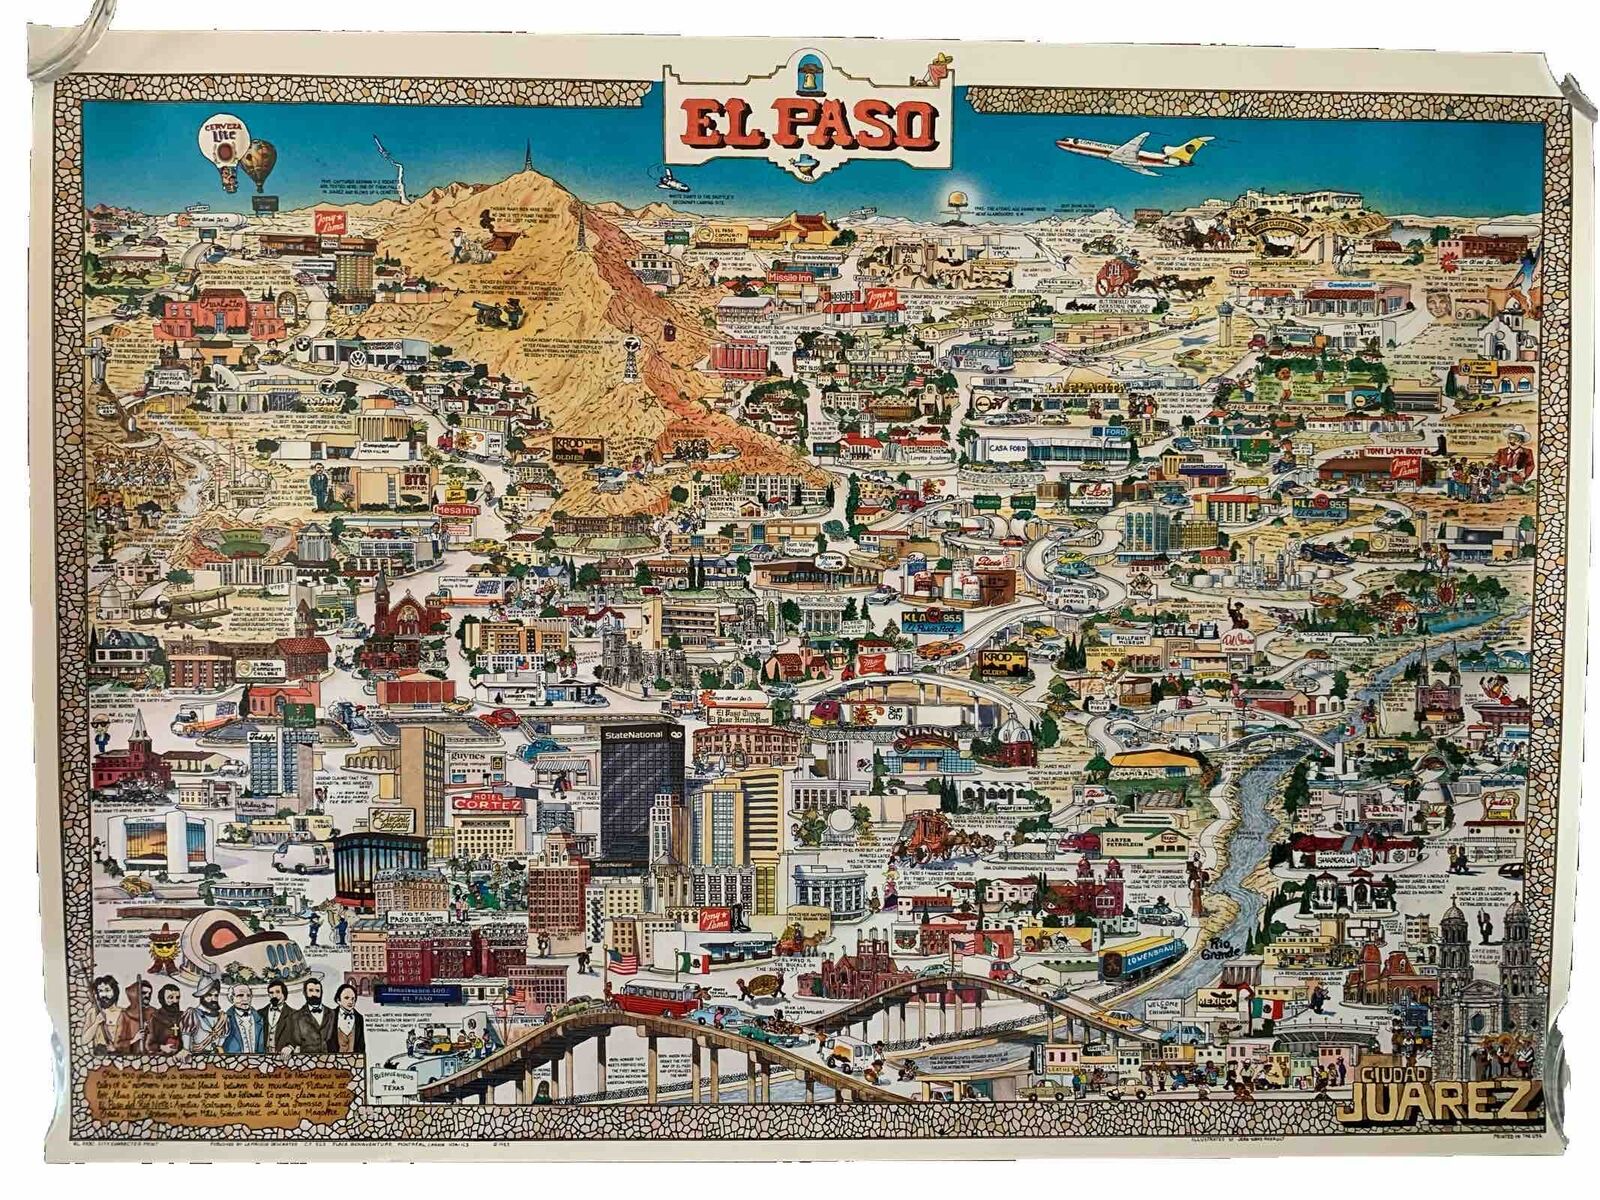 El Paso City Character Map Poster Print 1983